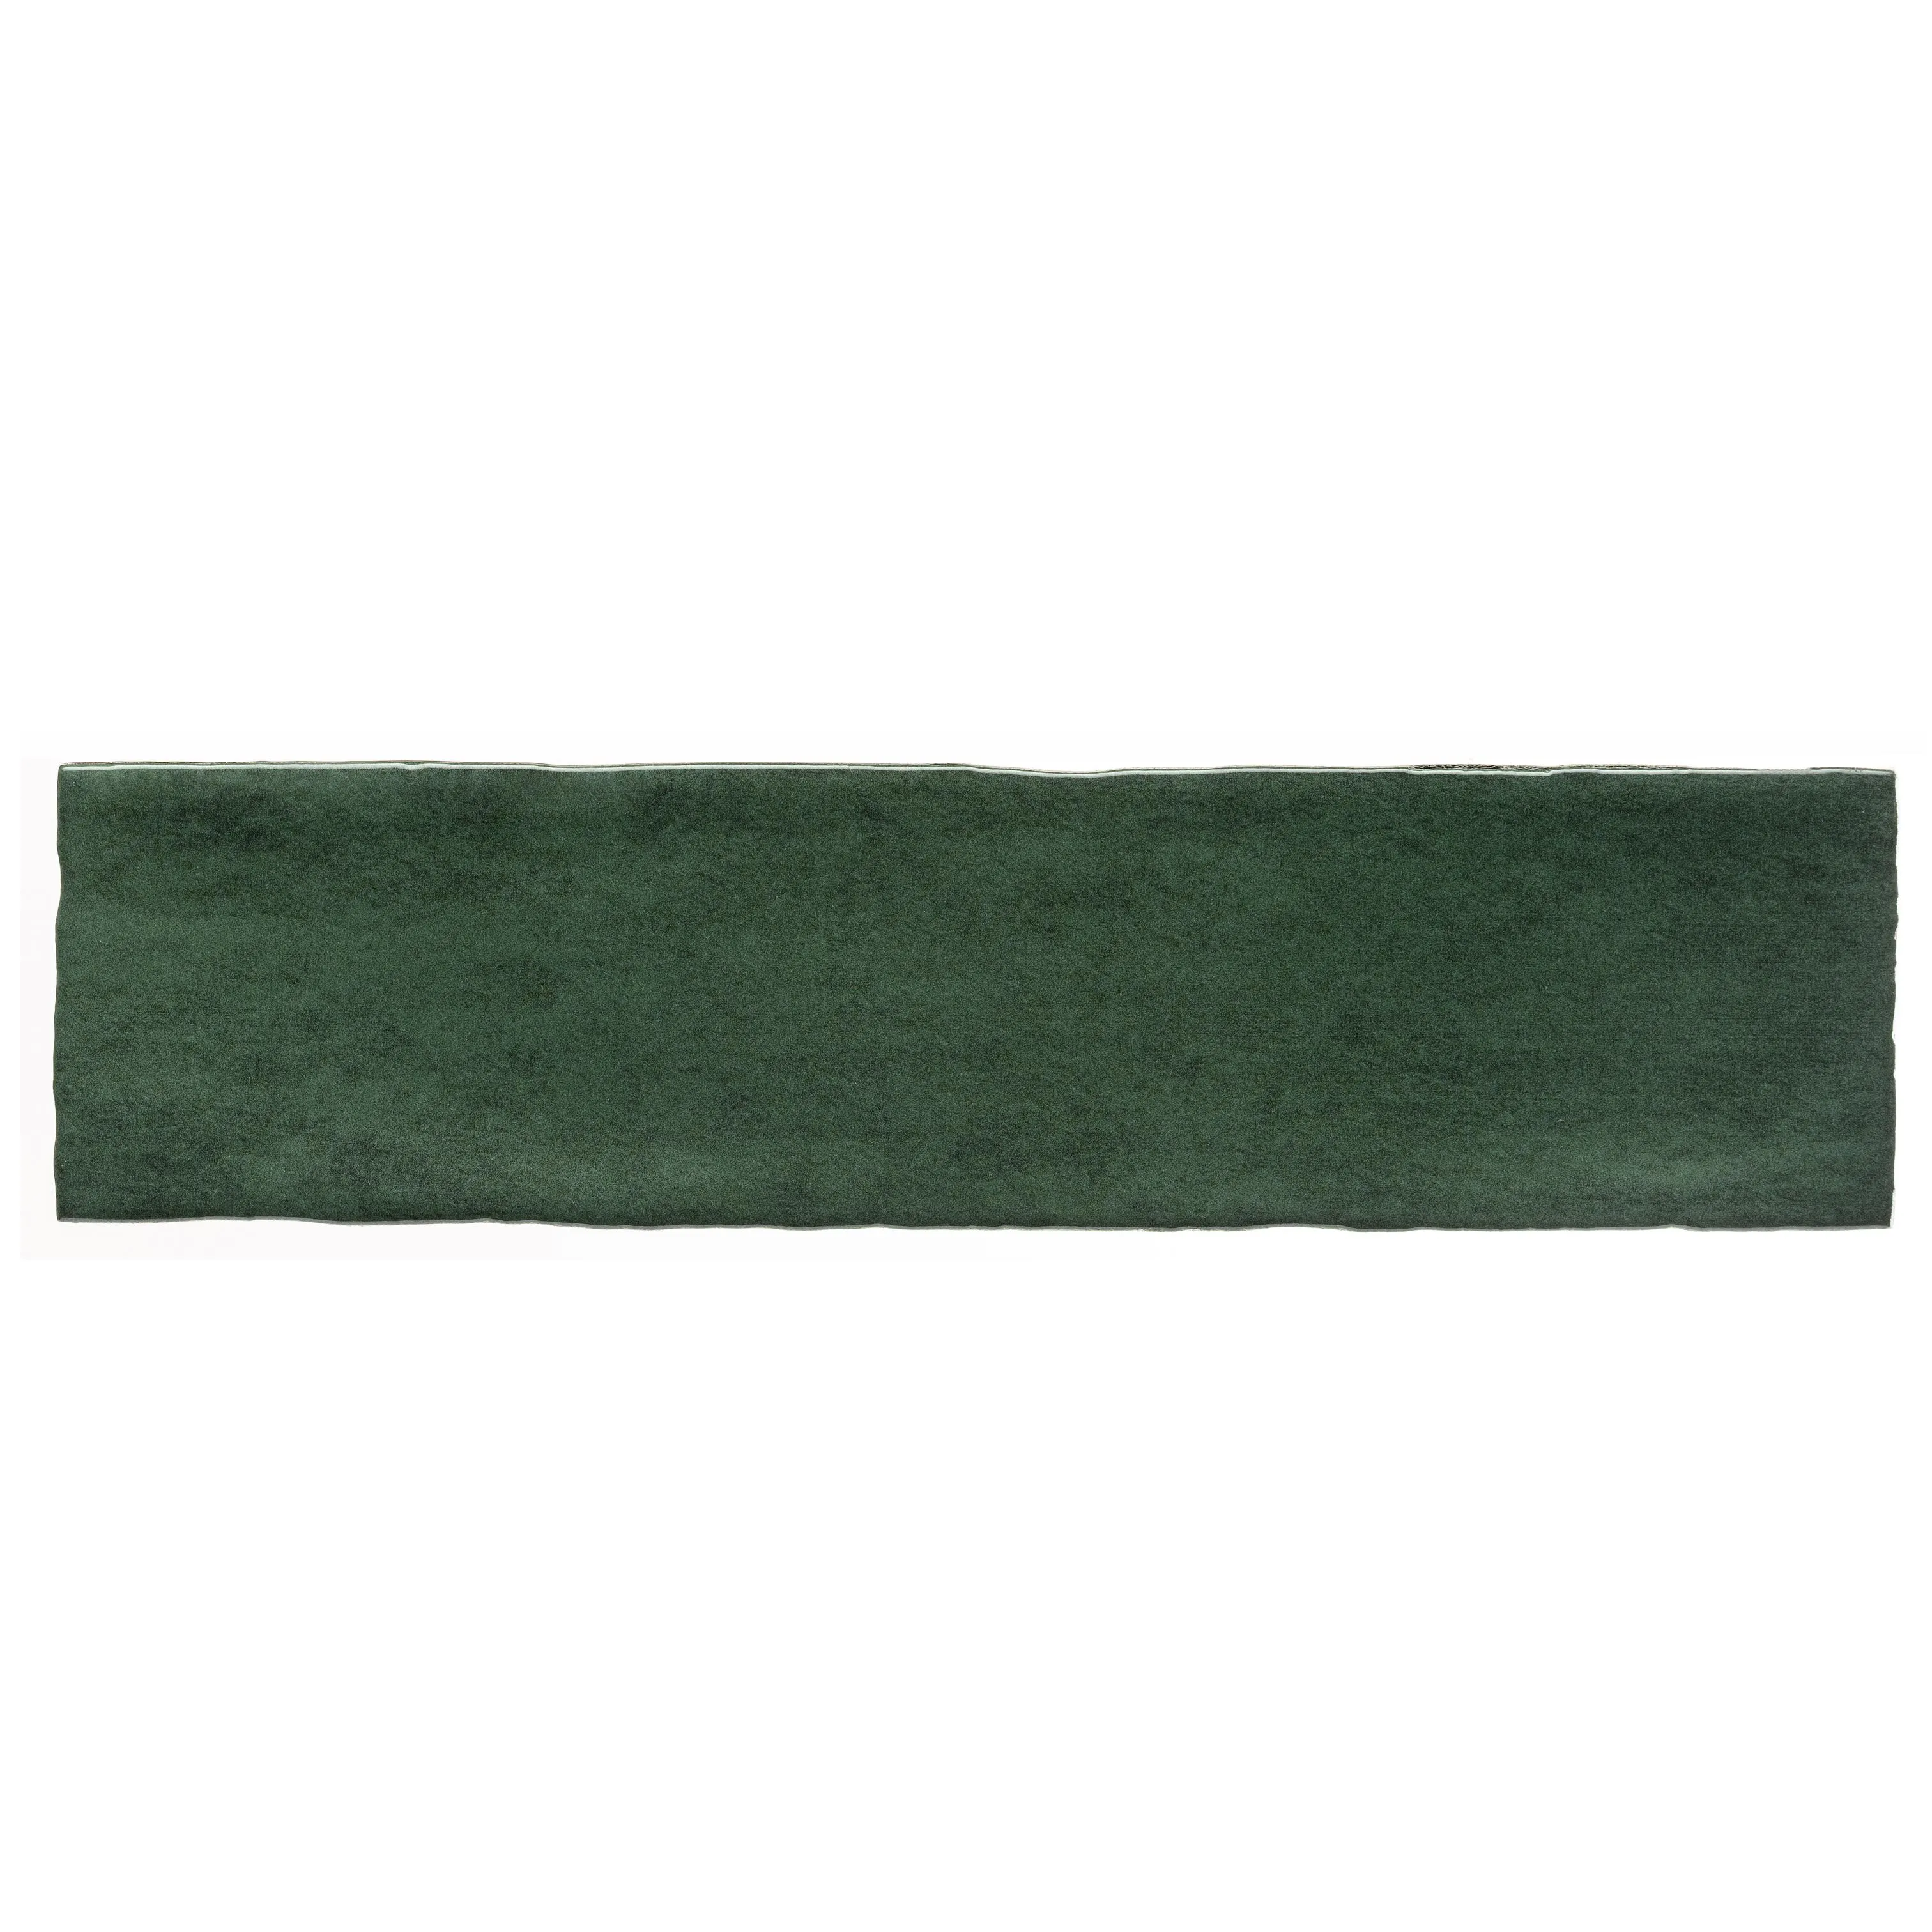 RAK Marakkesh Green Glossy Tiles - 65 x 260mm